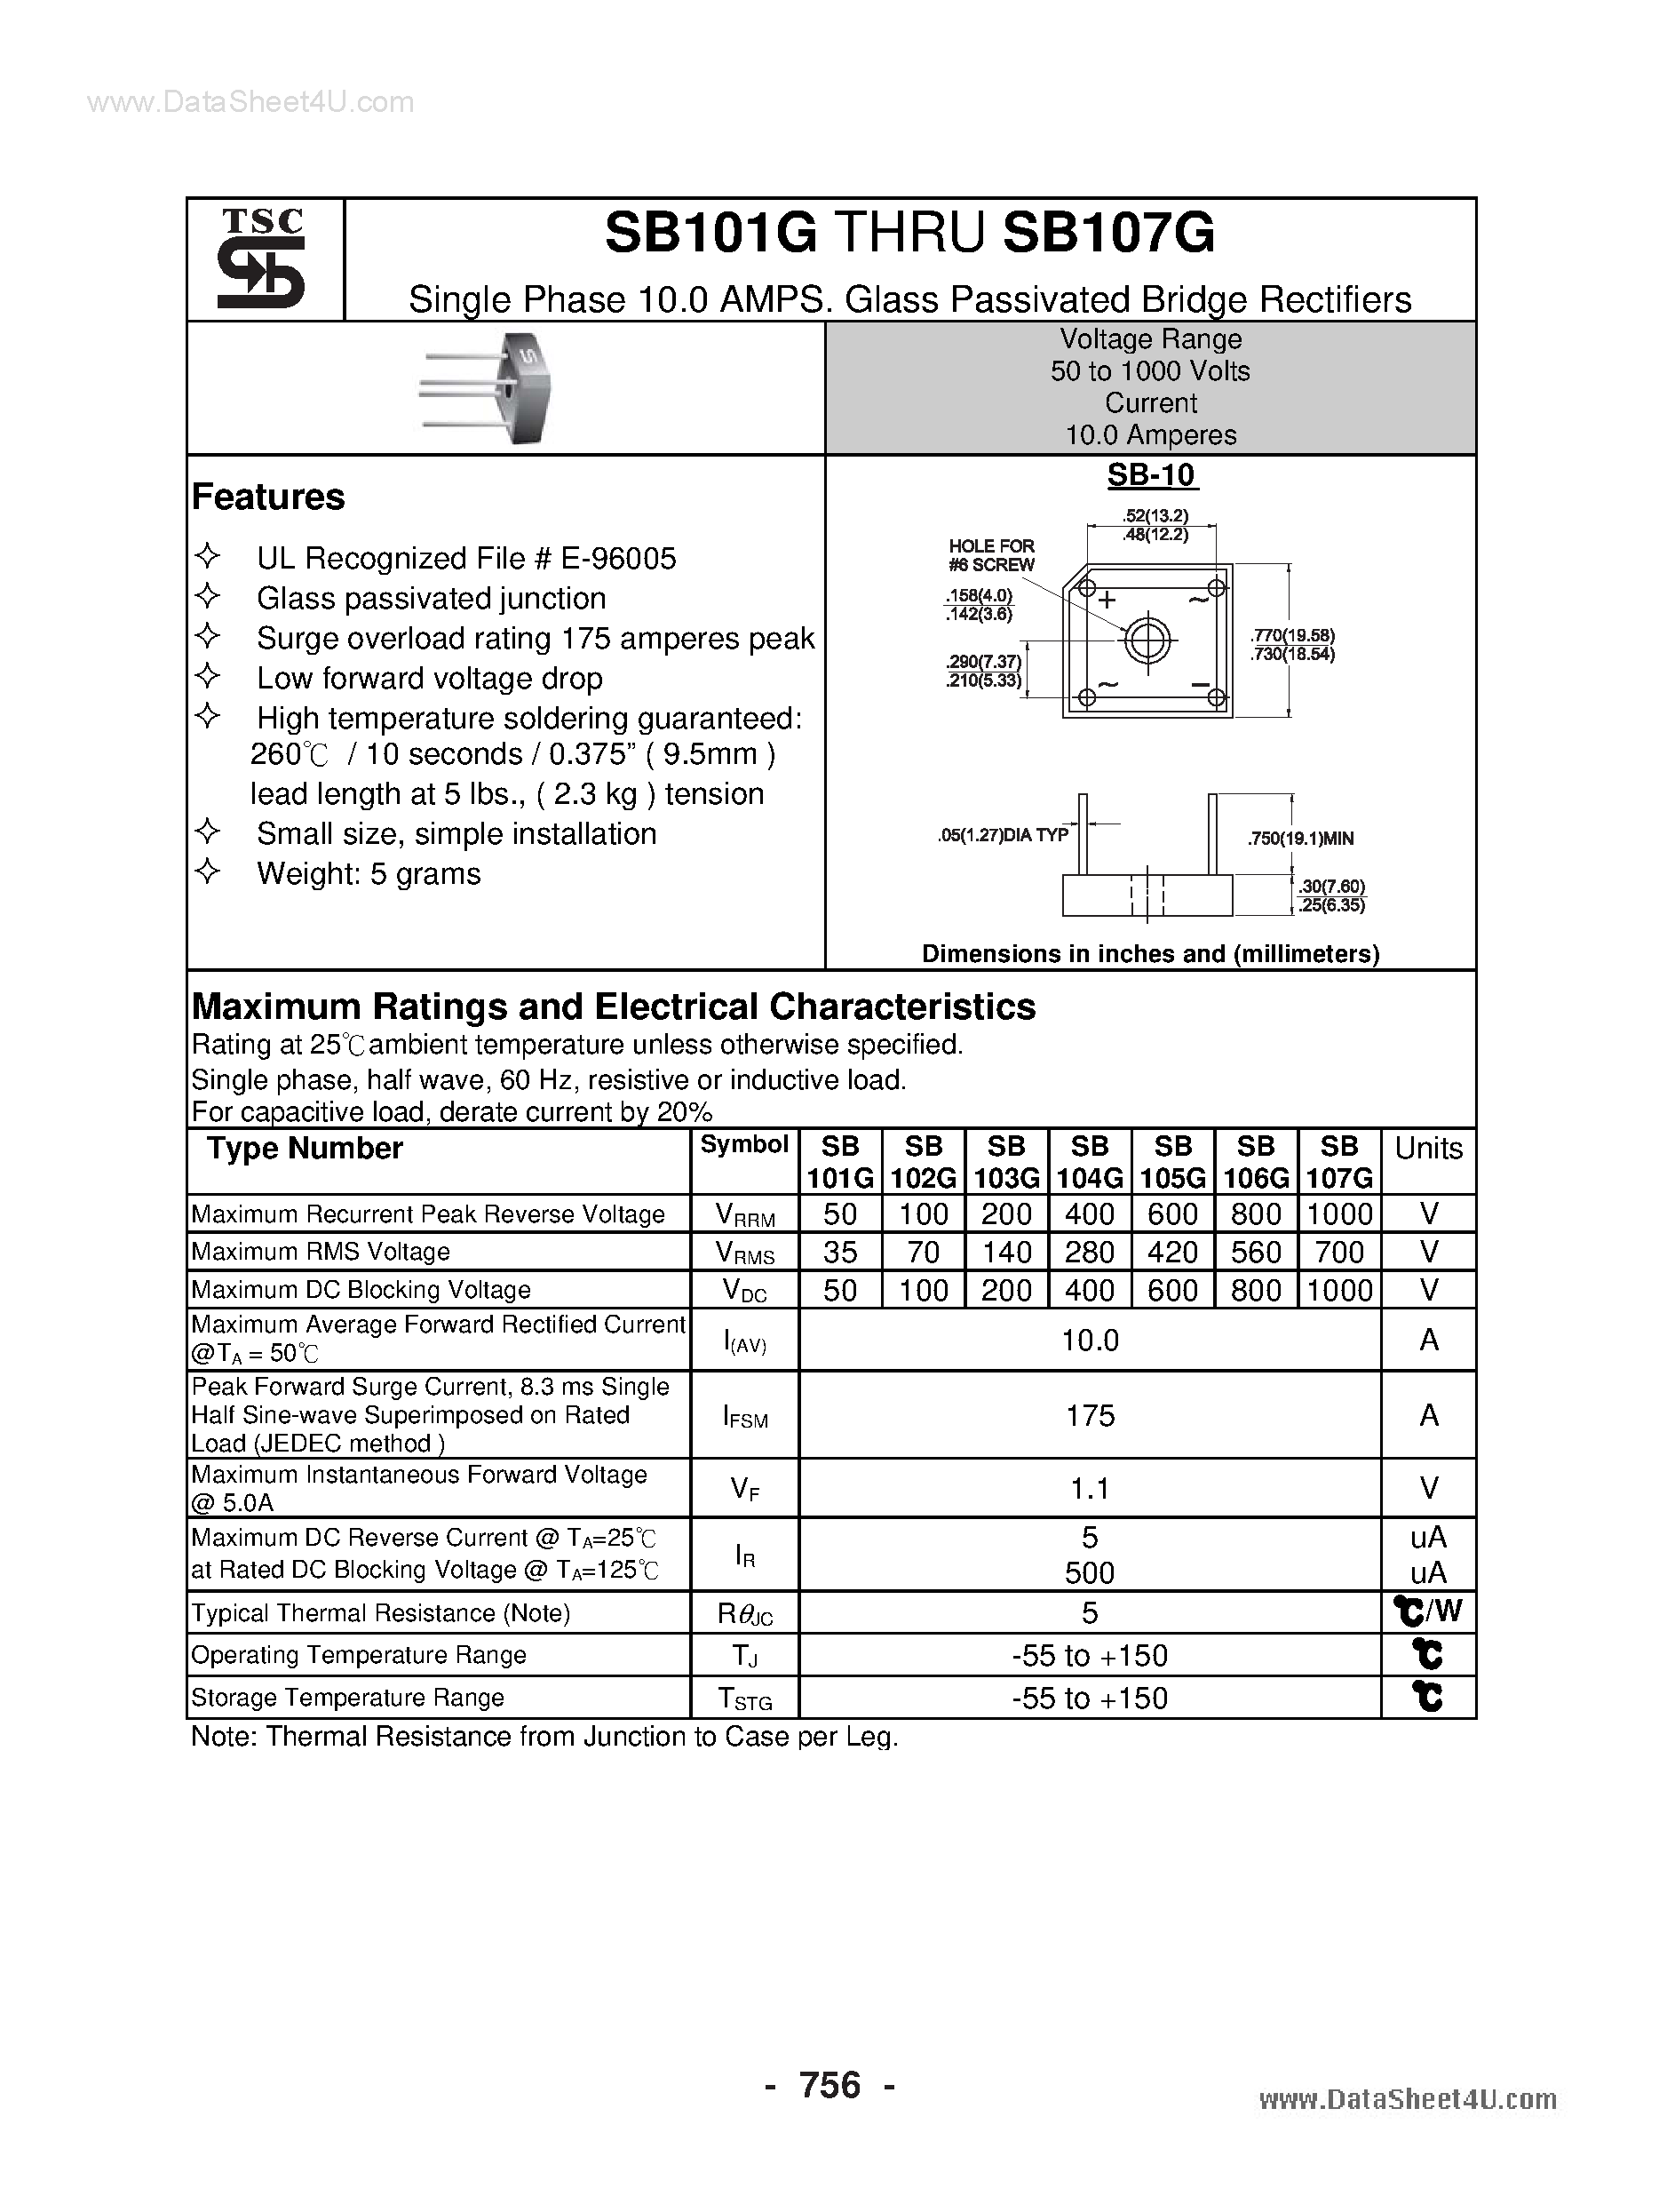 Datasheet SB101G - (SB101G - SB107G) Glass Passivated Bridge Rectifiers page 1